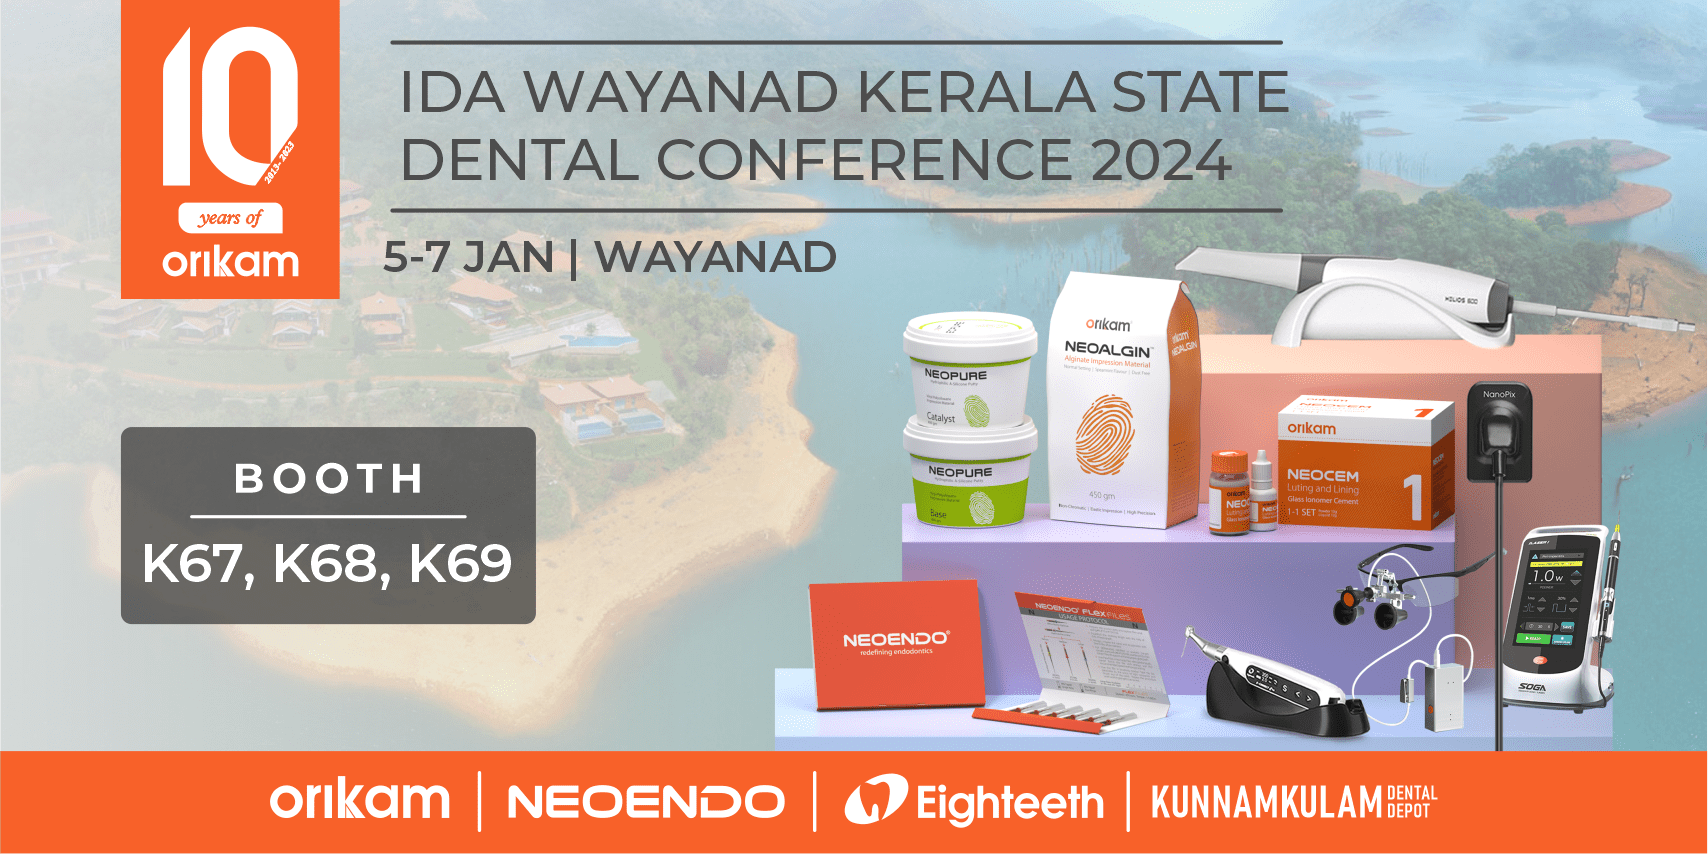 IDA Wayanad Kerala State Dental Conference 2024